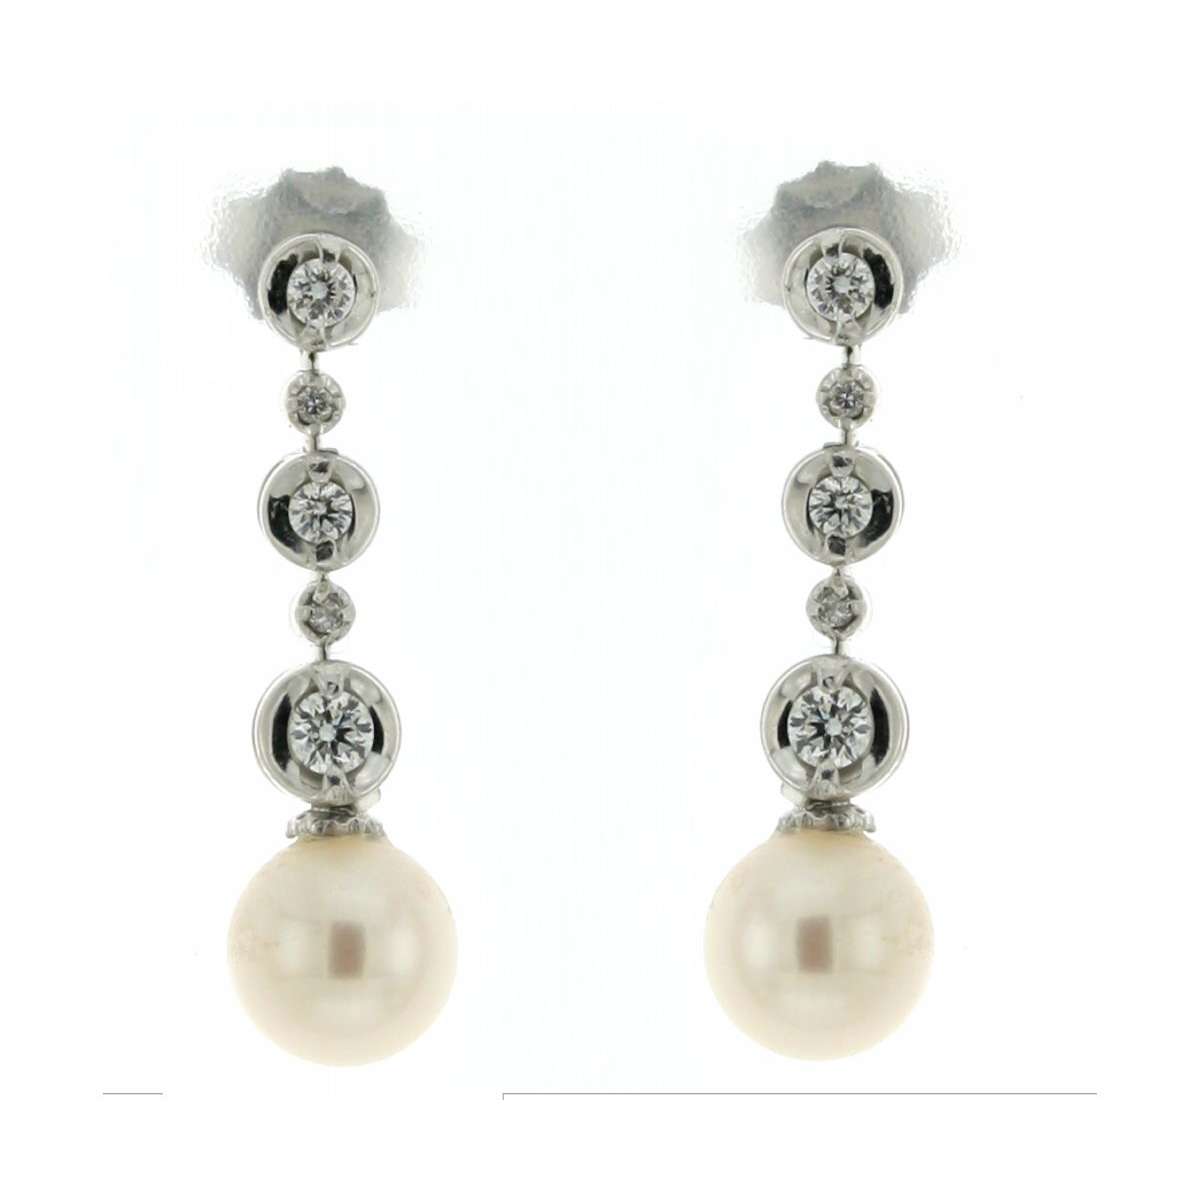 Dangling earrings 0.28 carats diamonds G-VVS1  pearls 7mm